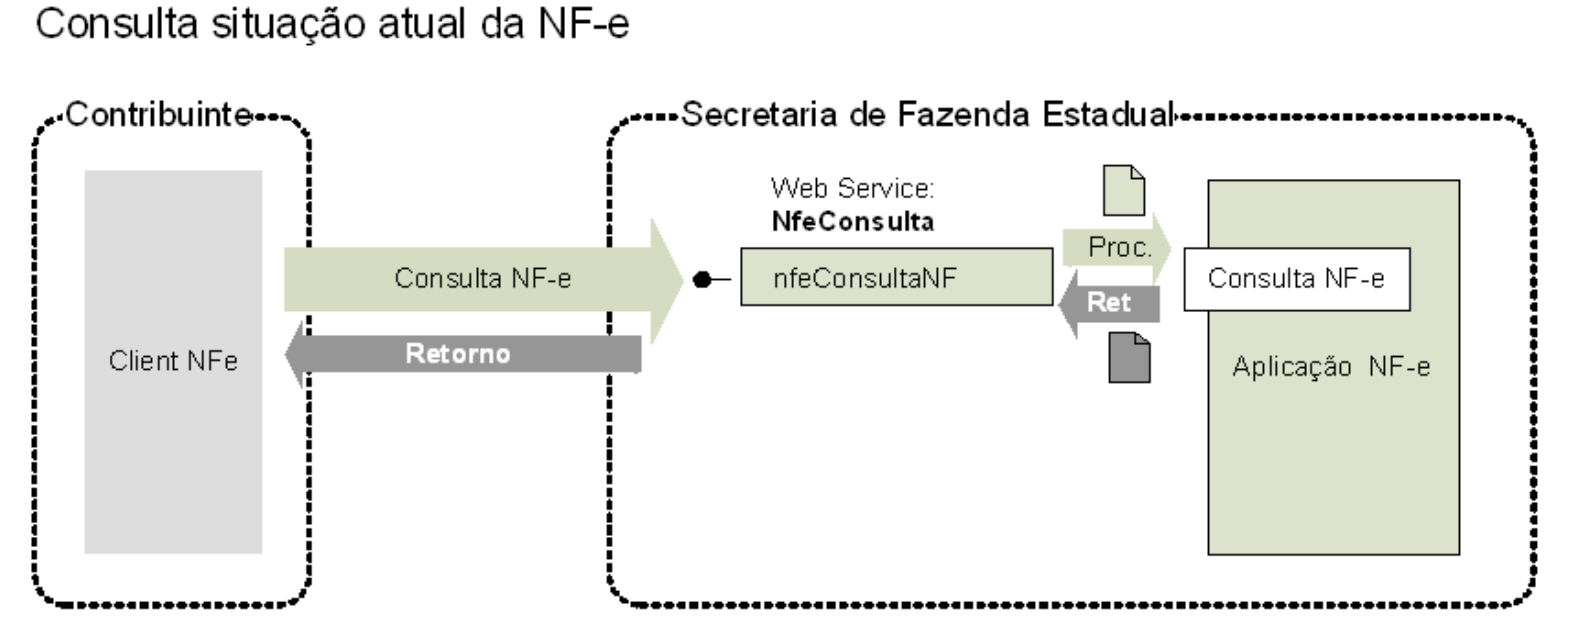 Fluxo do Web Service nfeConsulta